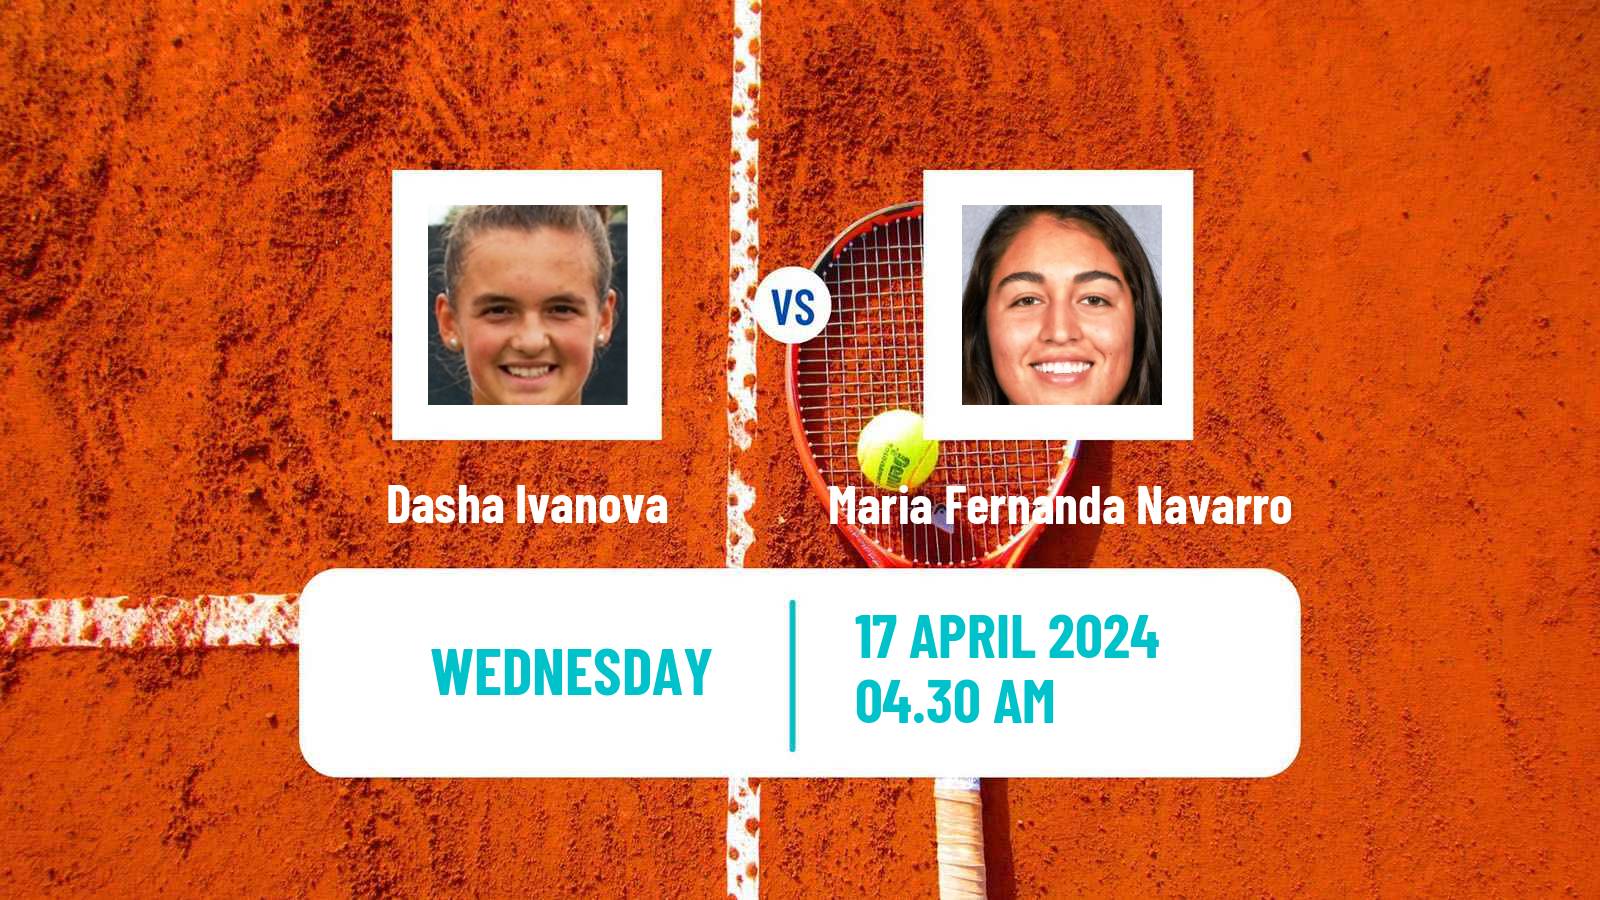 Tennis ITF W15 Monastir 14 Women Dasha Ivanova - Maria Fernanda Navarro